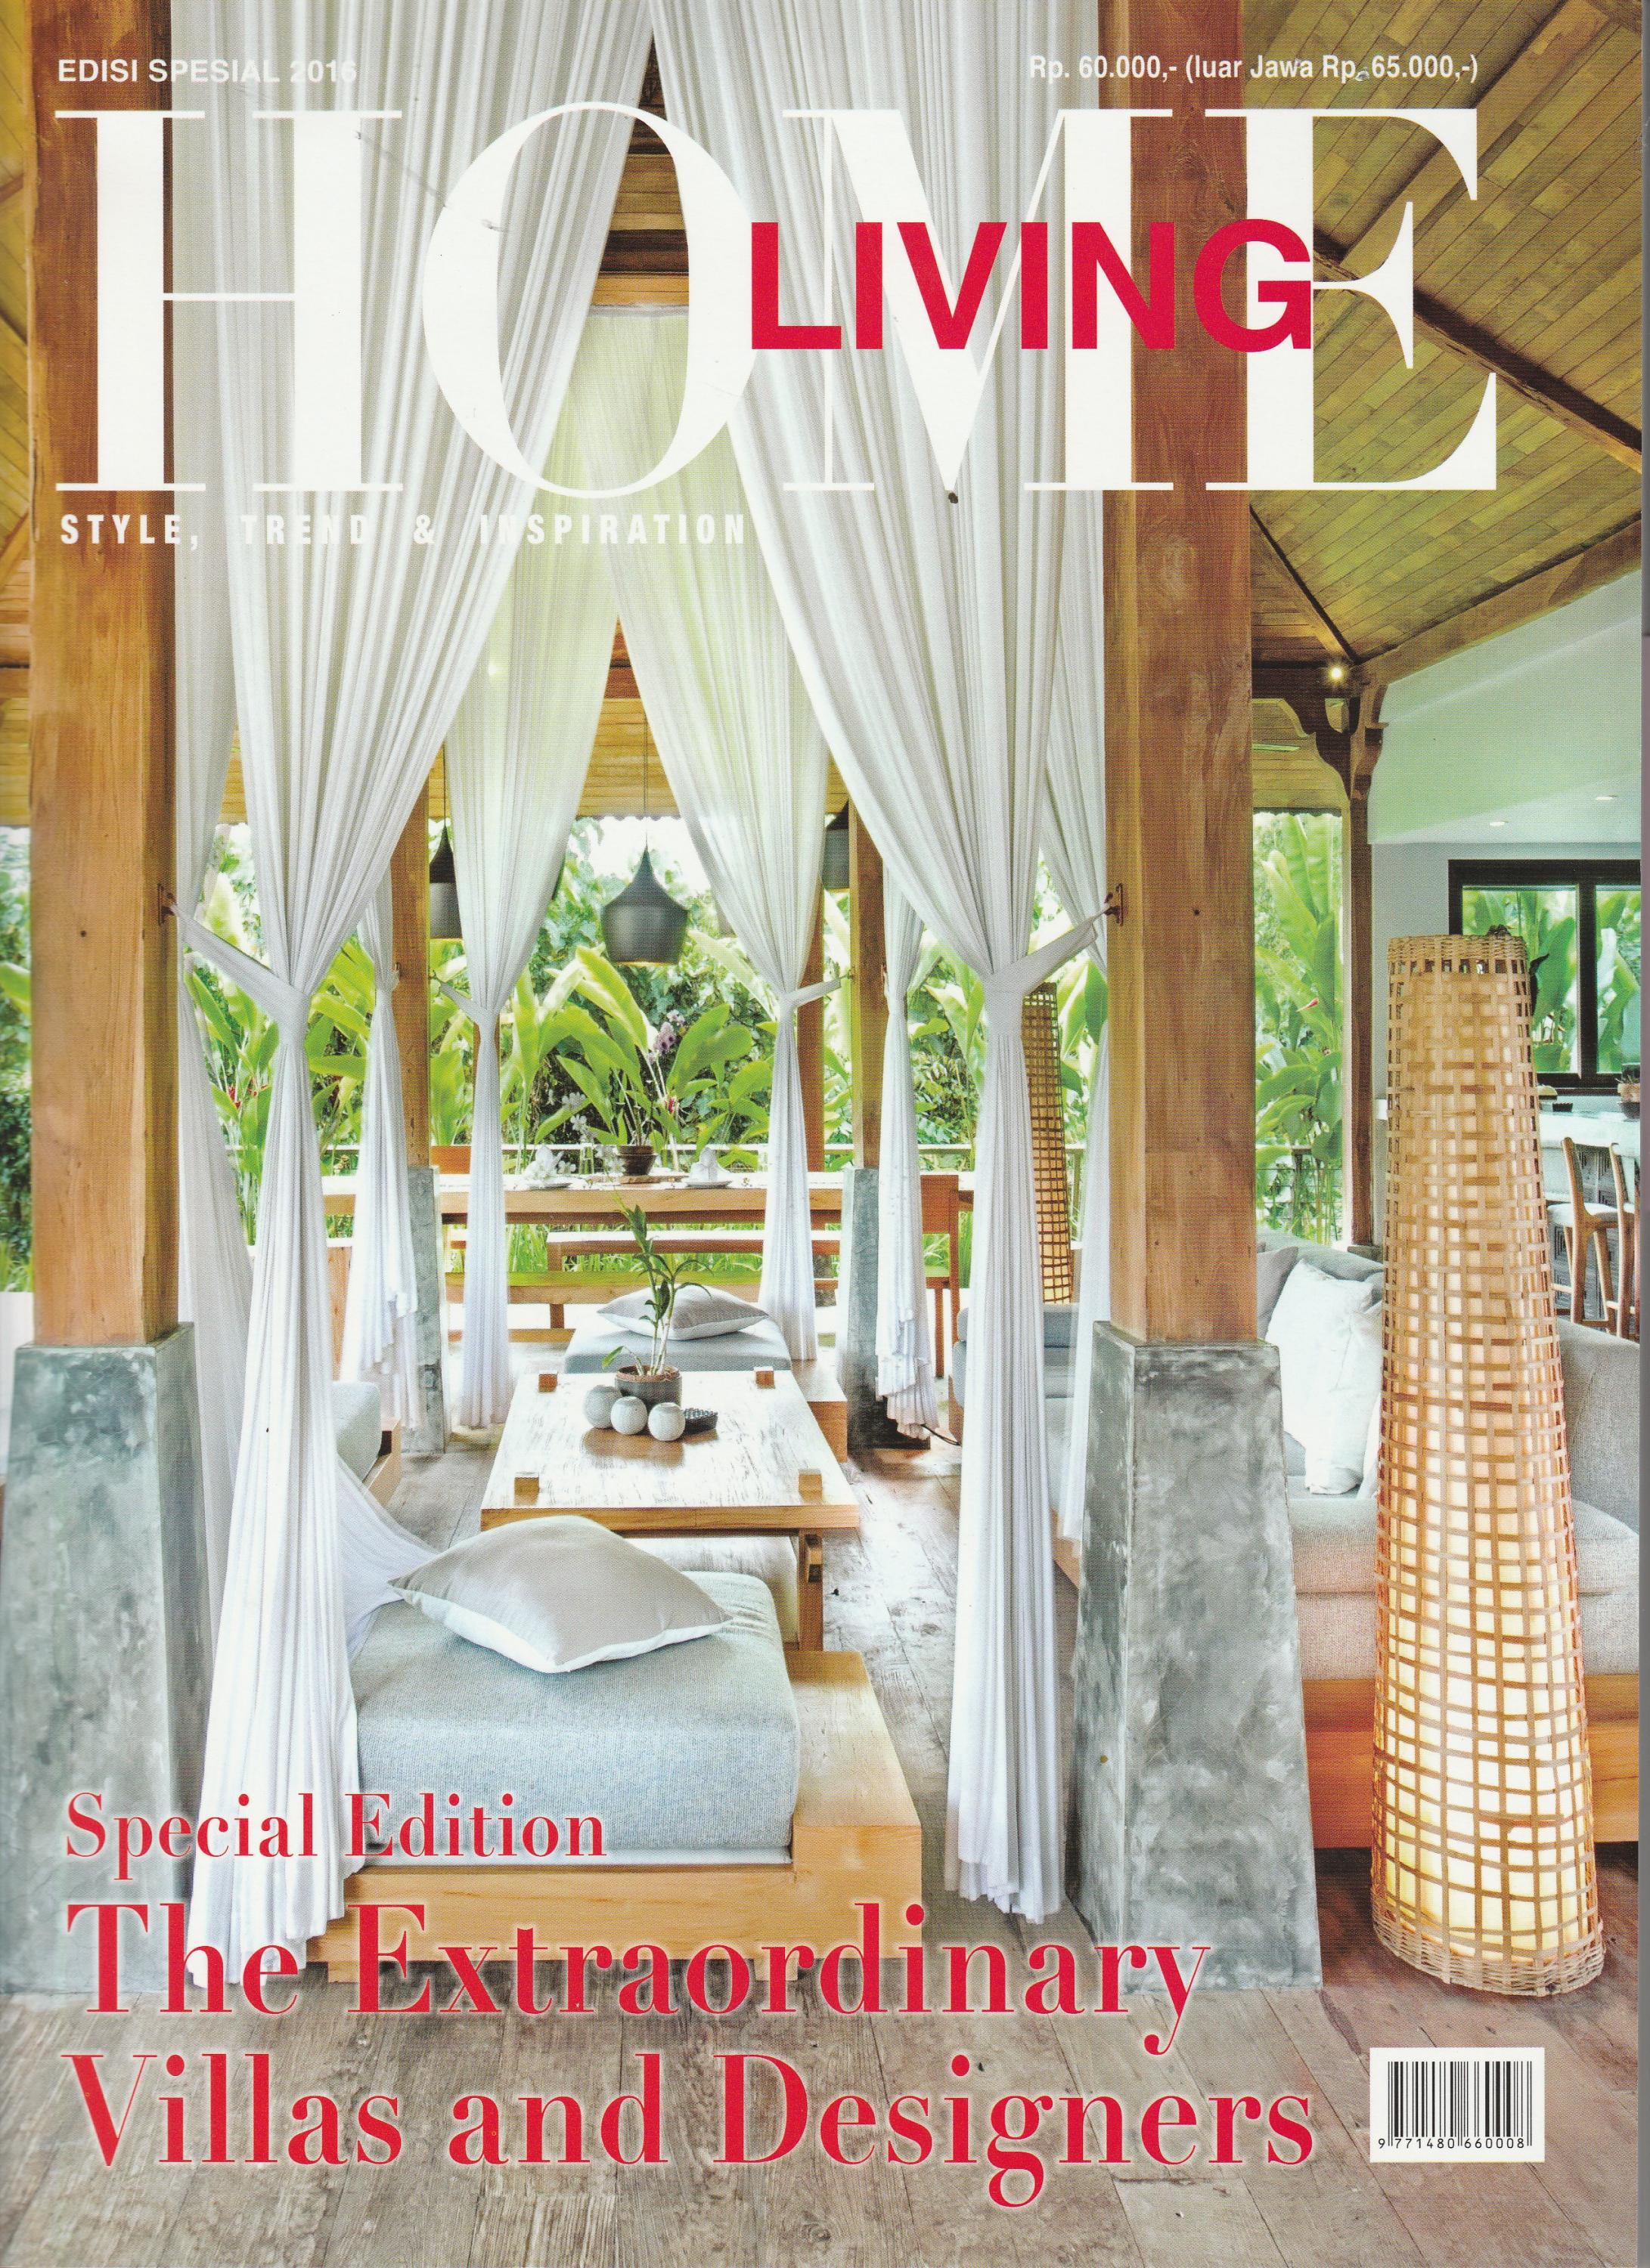 Hotel Tugu Bali - Home Living Spesial 2016